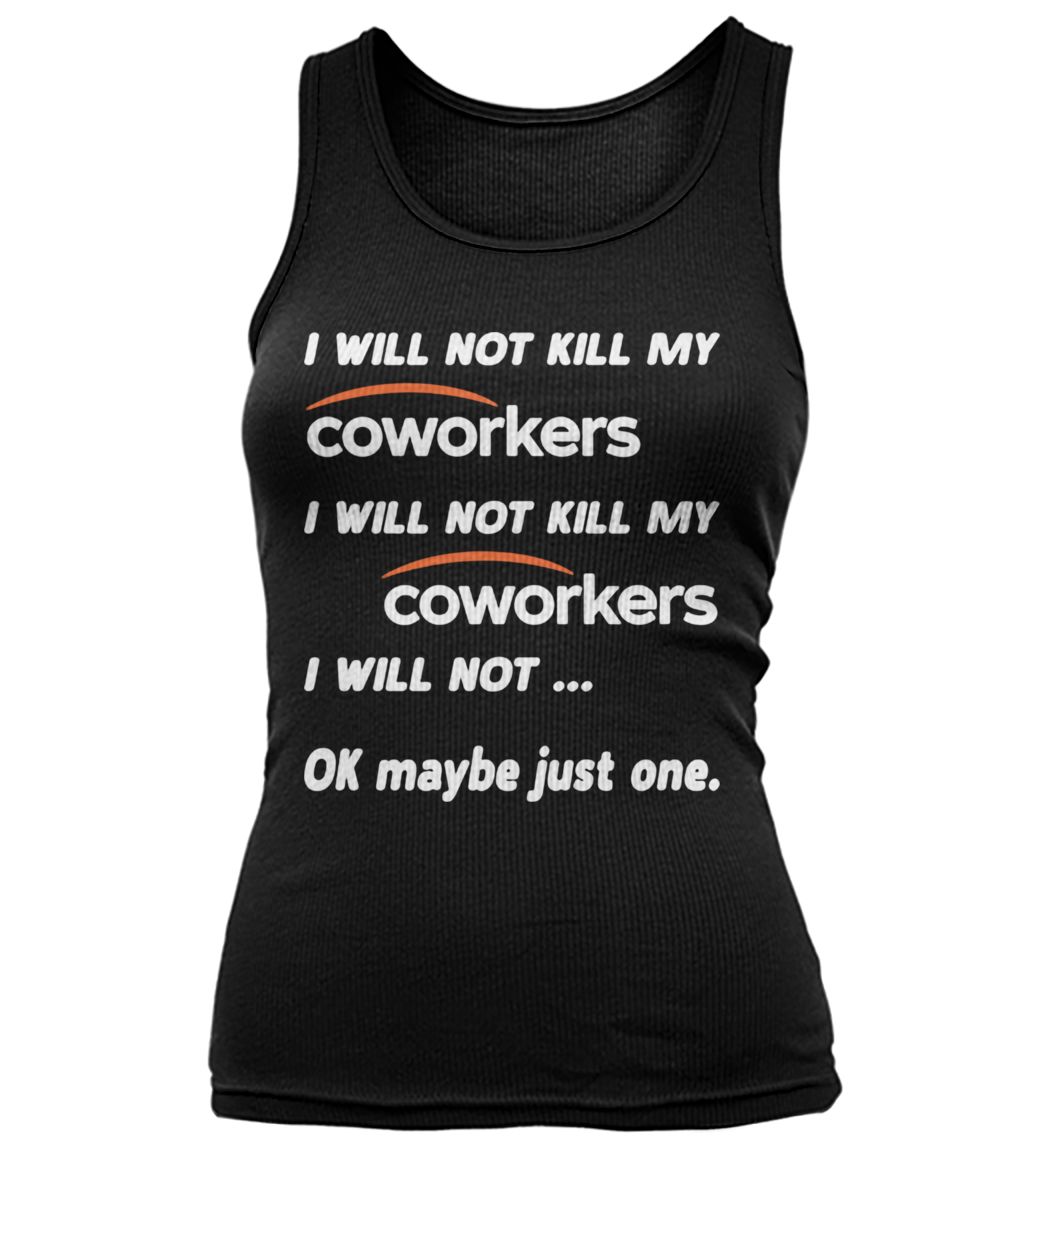 I will not kill my coworkers I will not kill my coworkers I will not ok maybe just one women's tank top